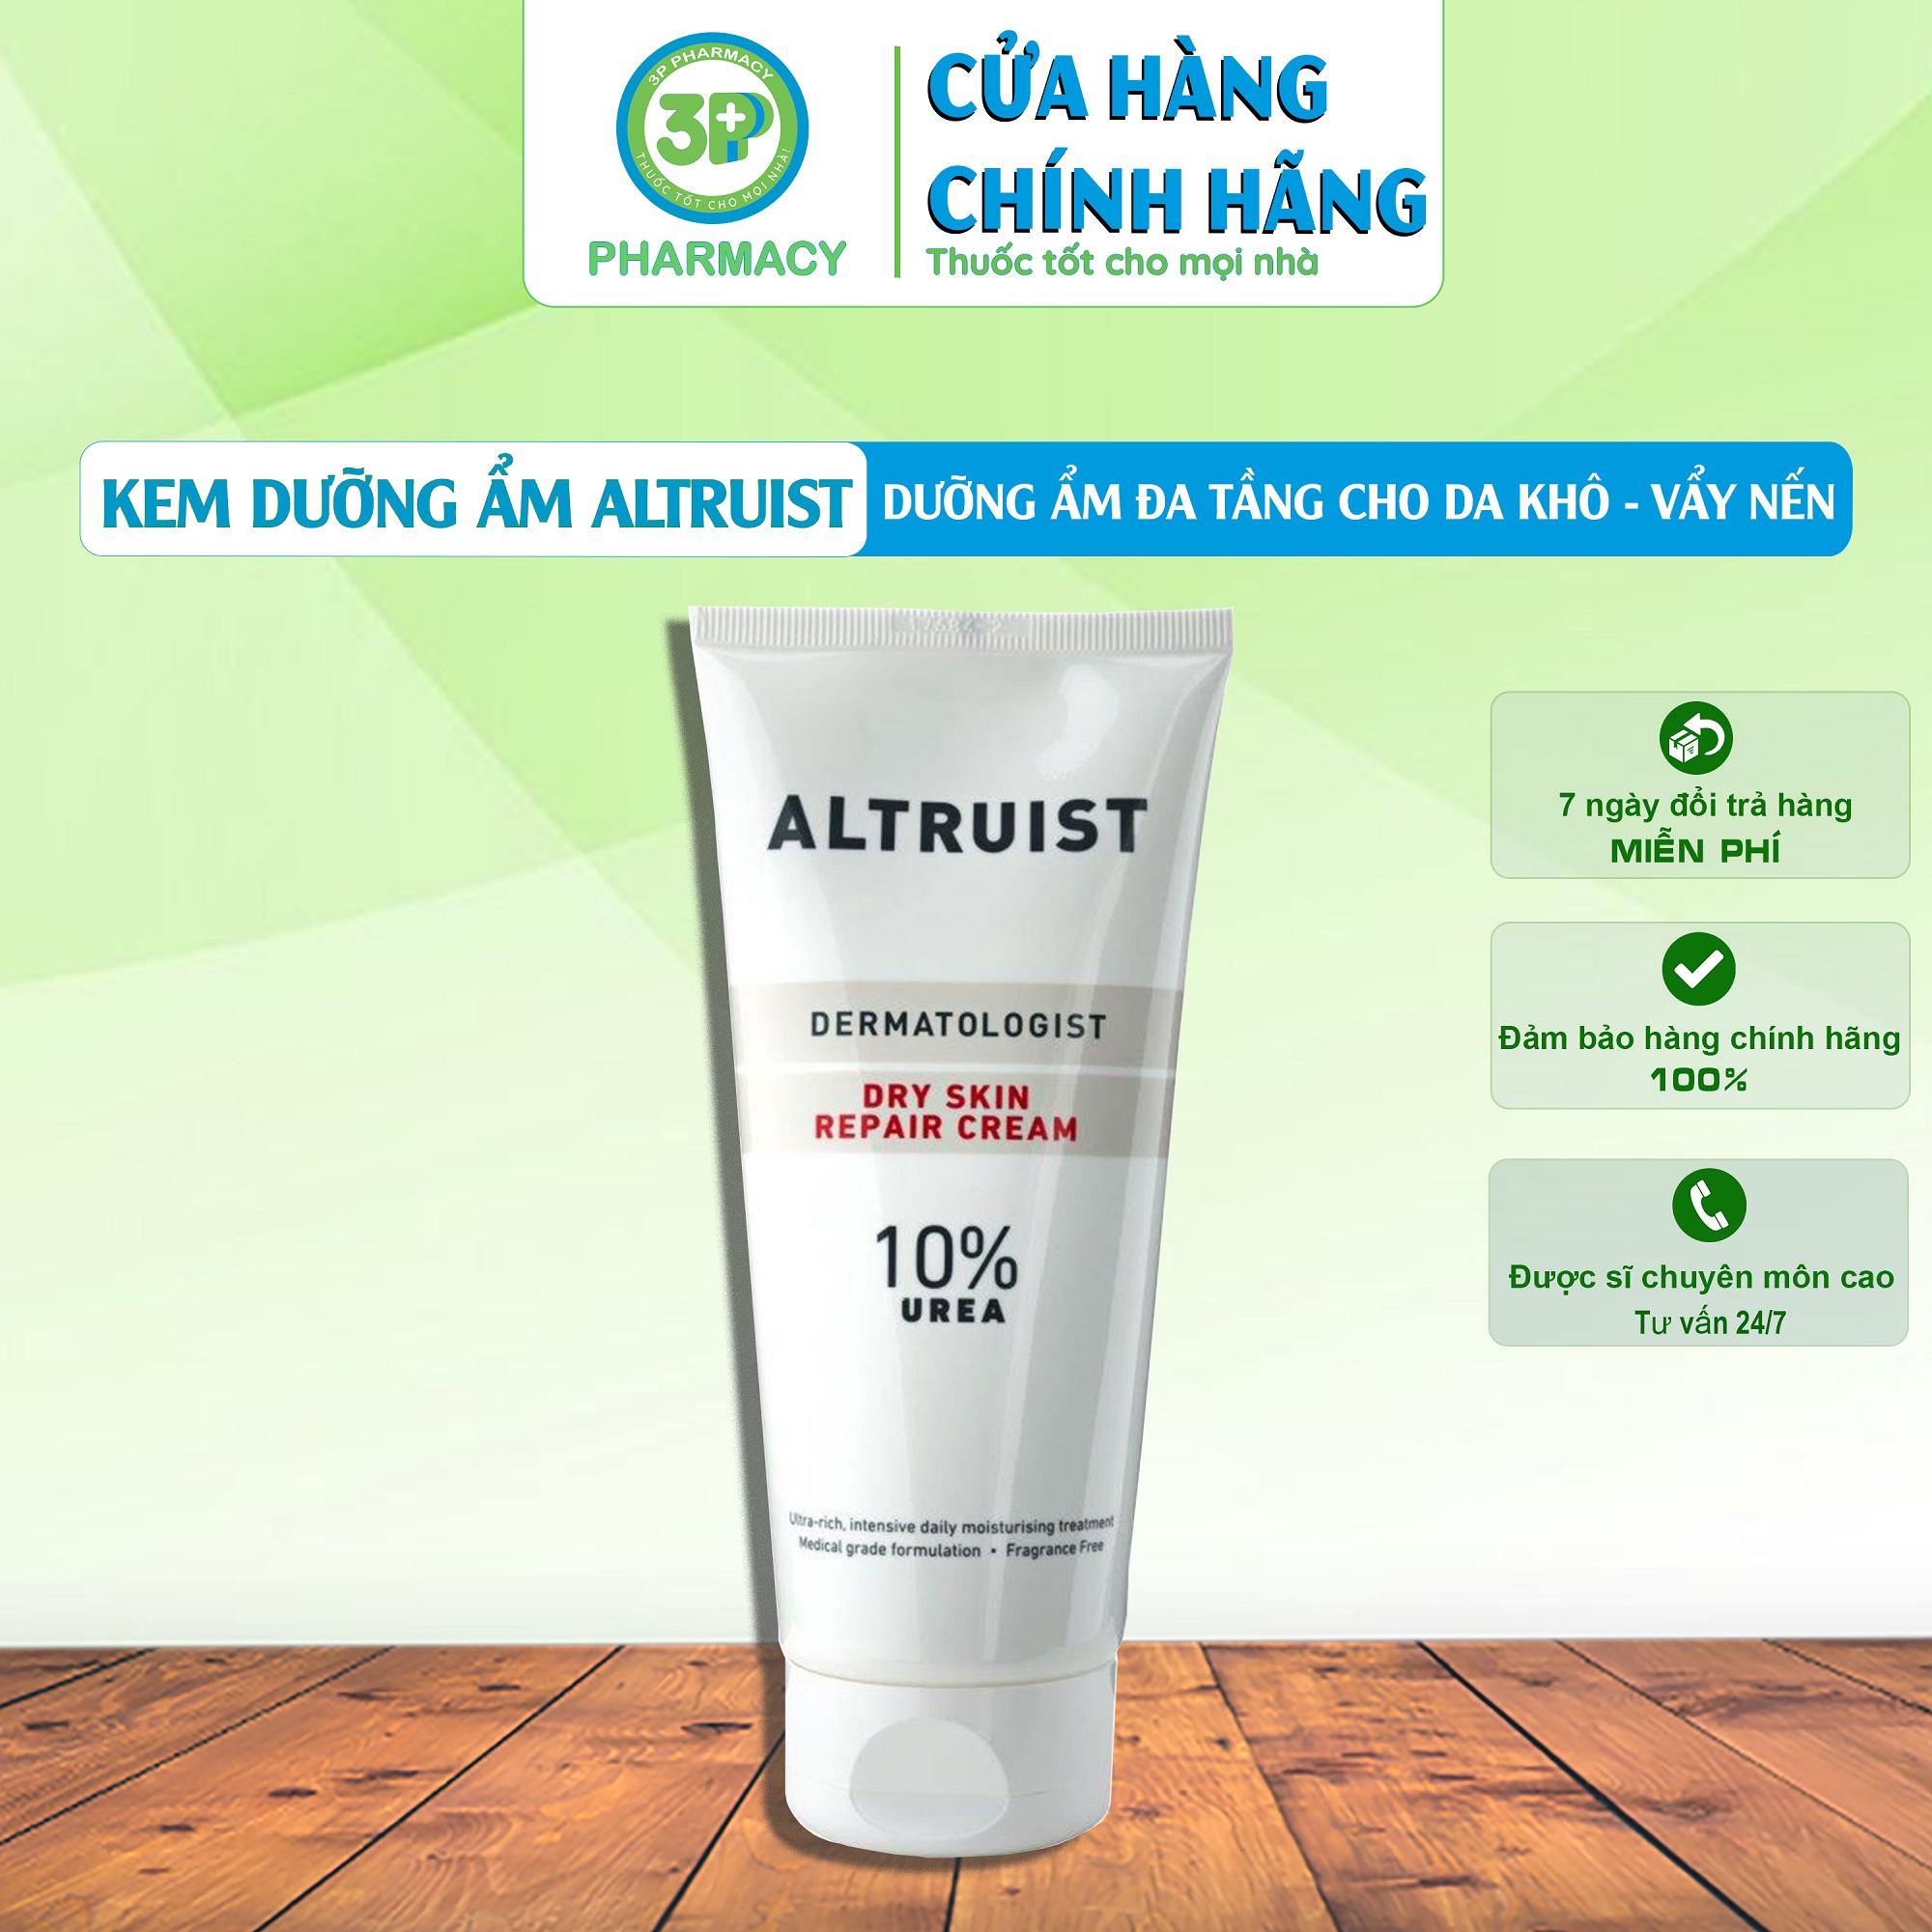 Kem dưỡng ẩm Altruist Dermatologist Dry Skin Repair Cream 10% Urea 200 ml bảo vệ da đa tầng